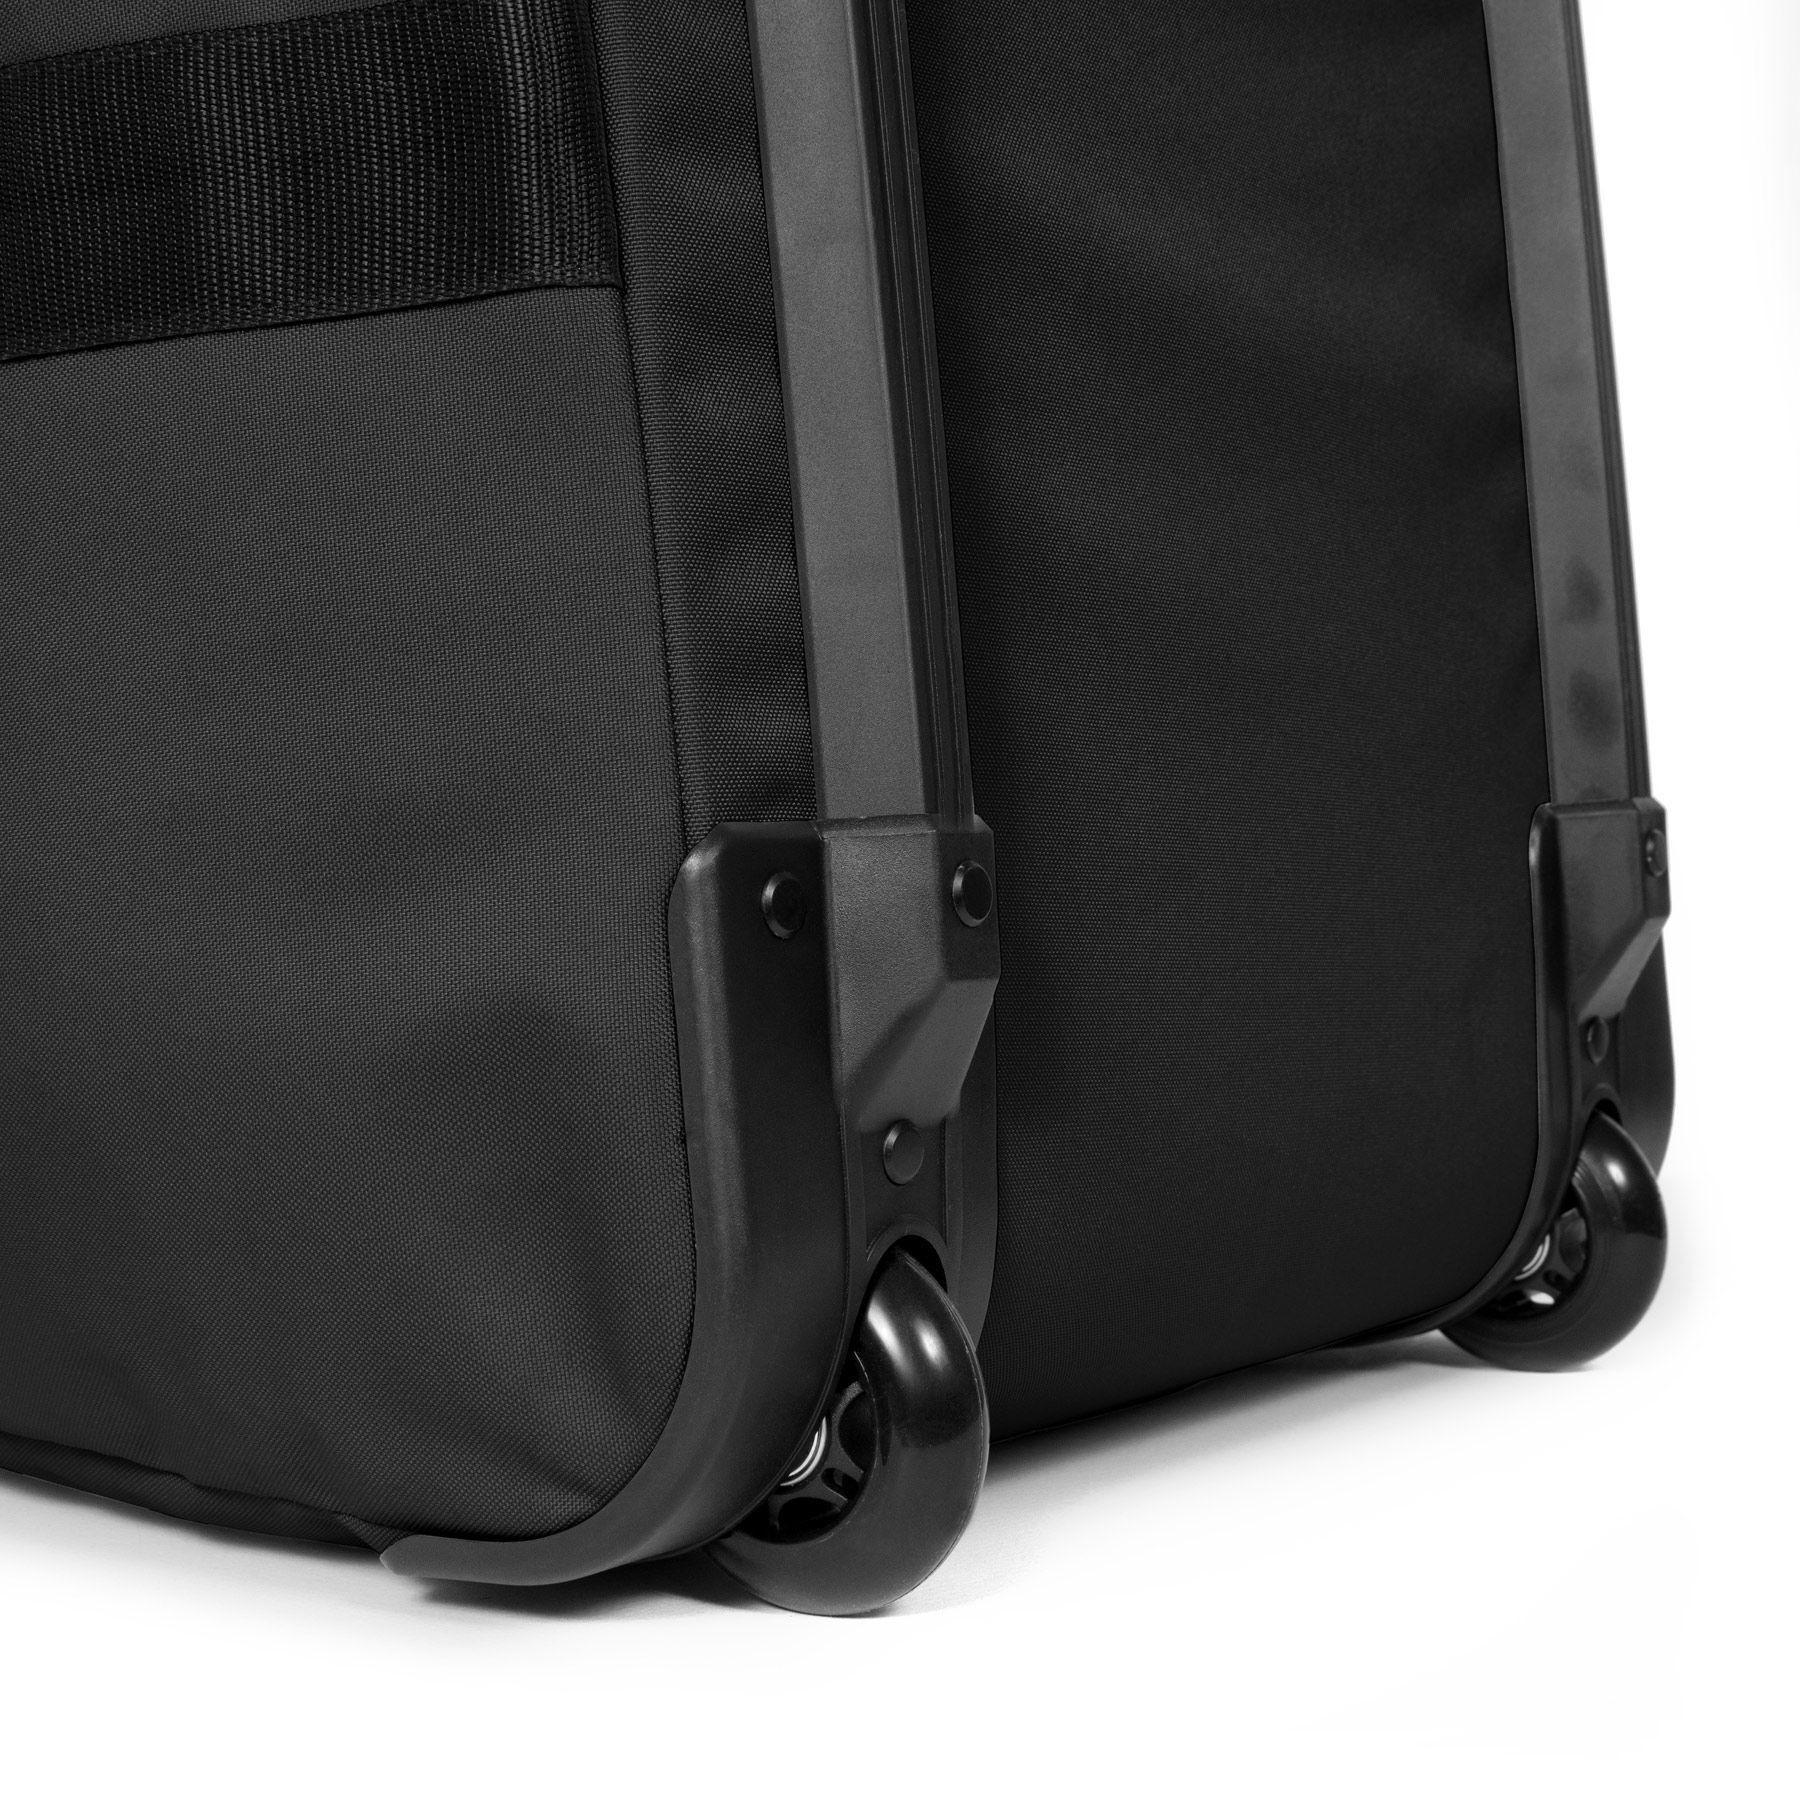 Travel bag Eastpak Warehouse Plus